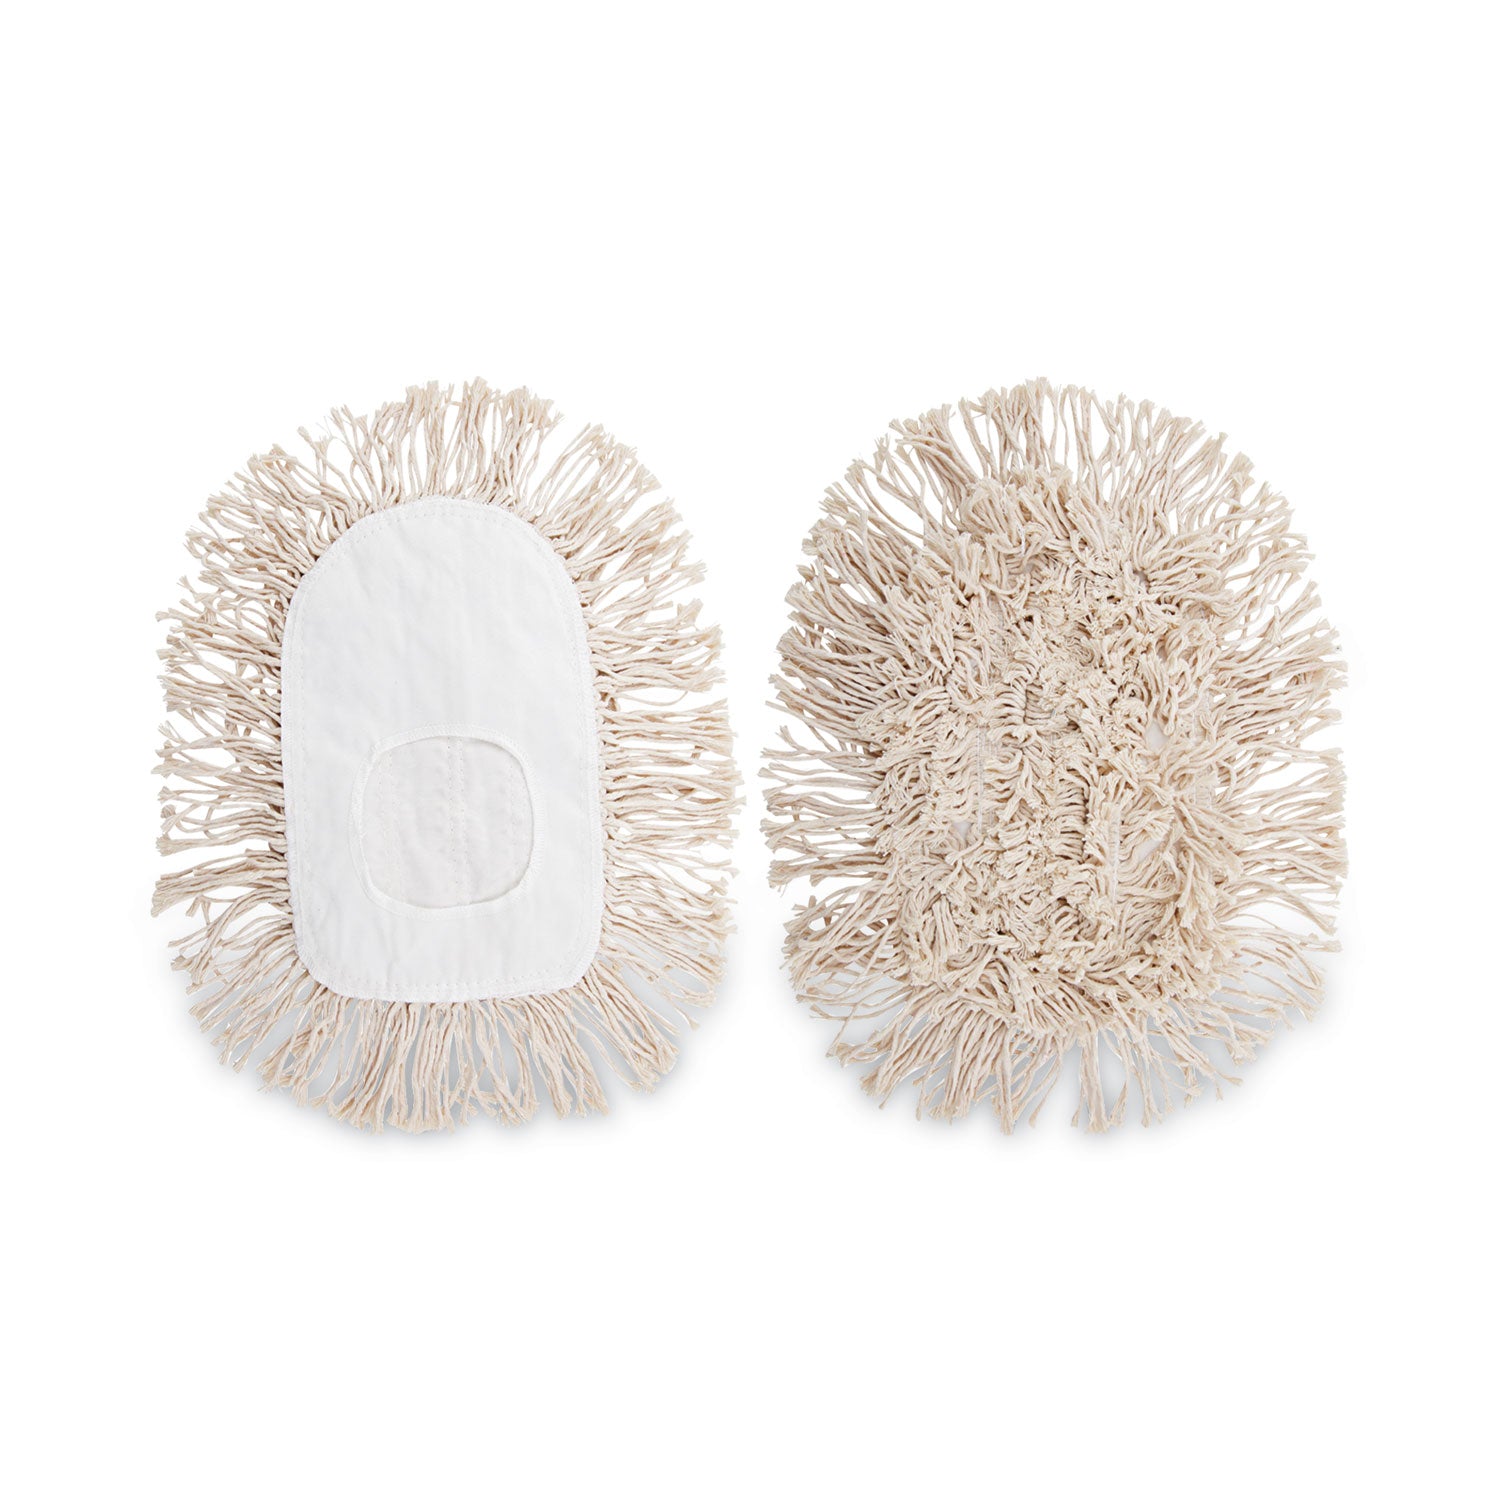 Wedge Dust Mop Head, Cotton, 17.5 x 13.5, White - 